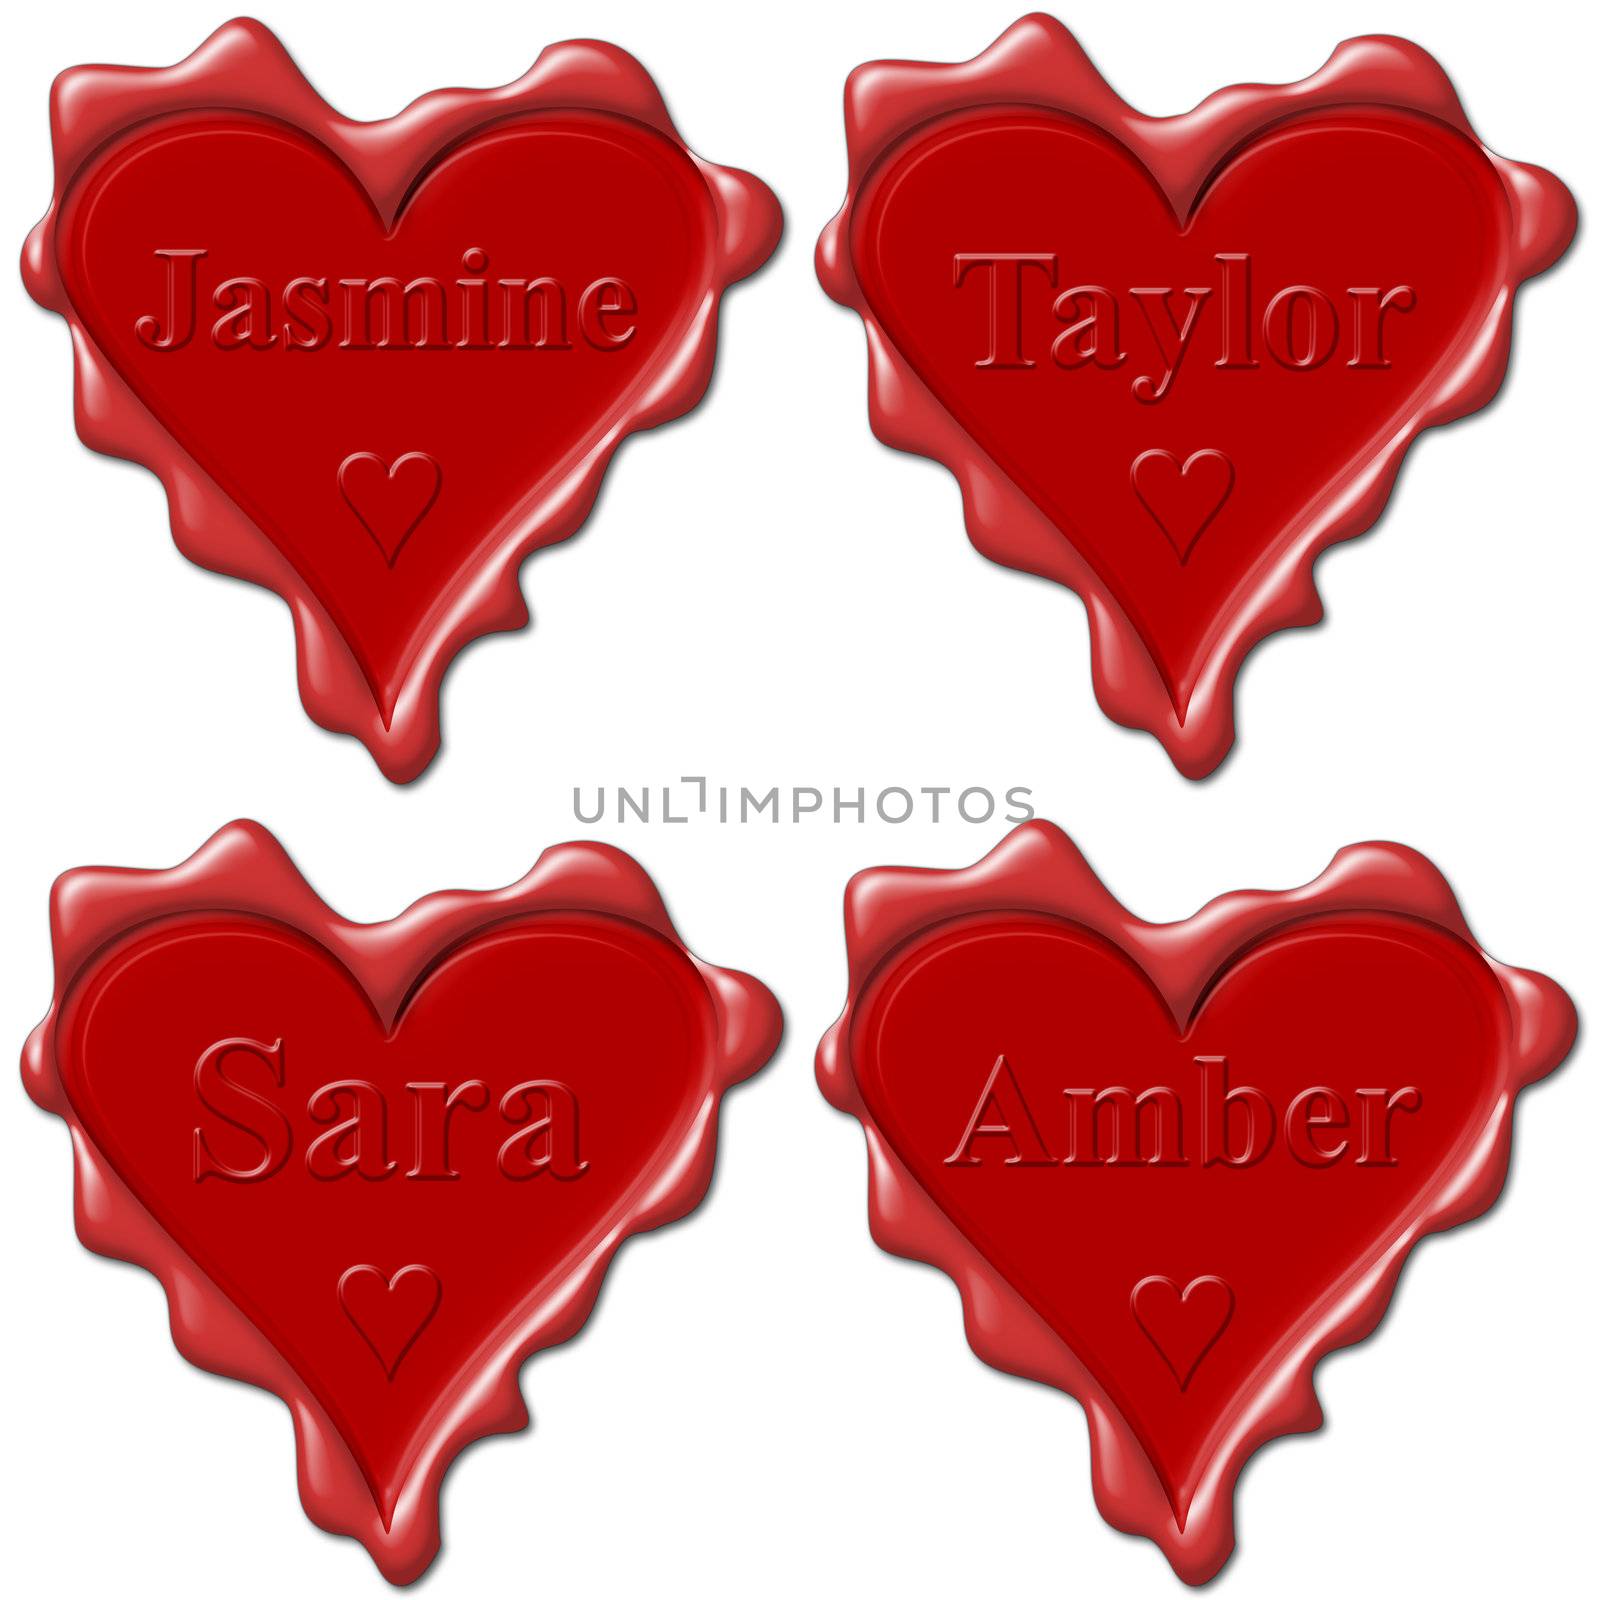 Valentine love hearts with names: Jasmine, Taylor, Sara, Amber